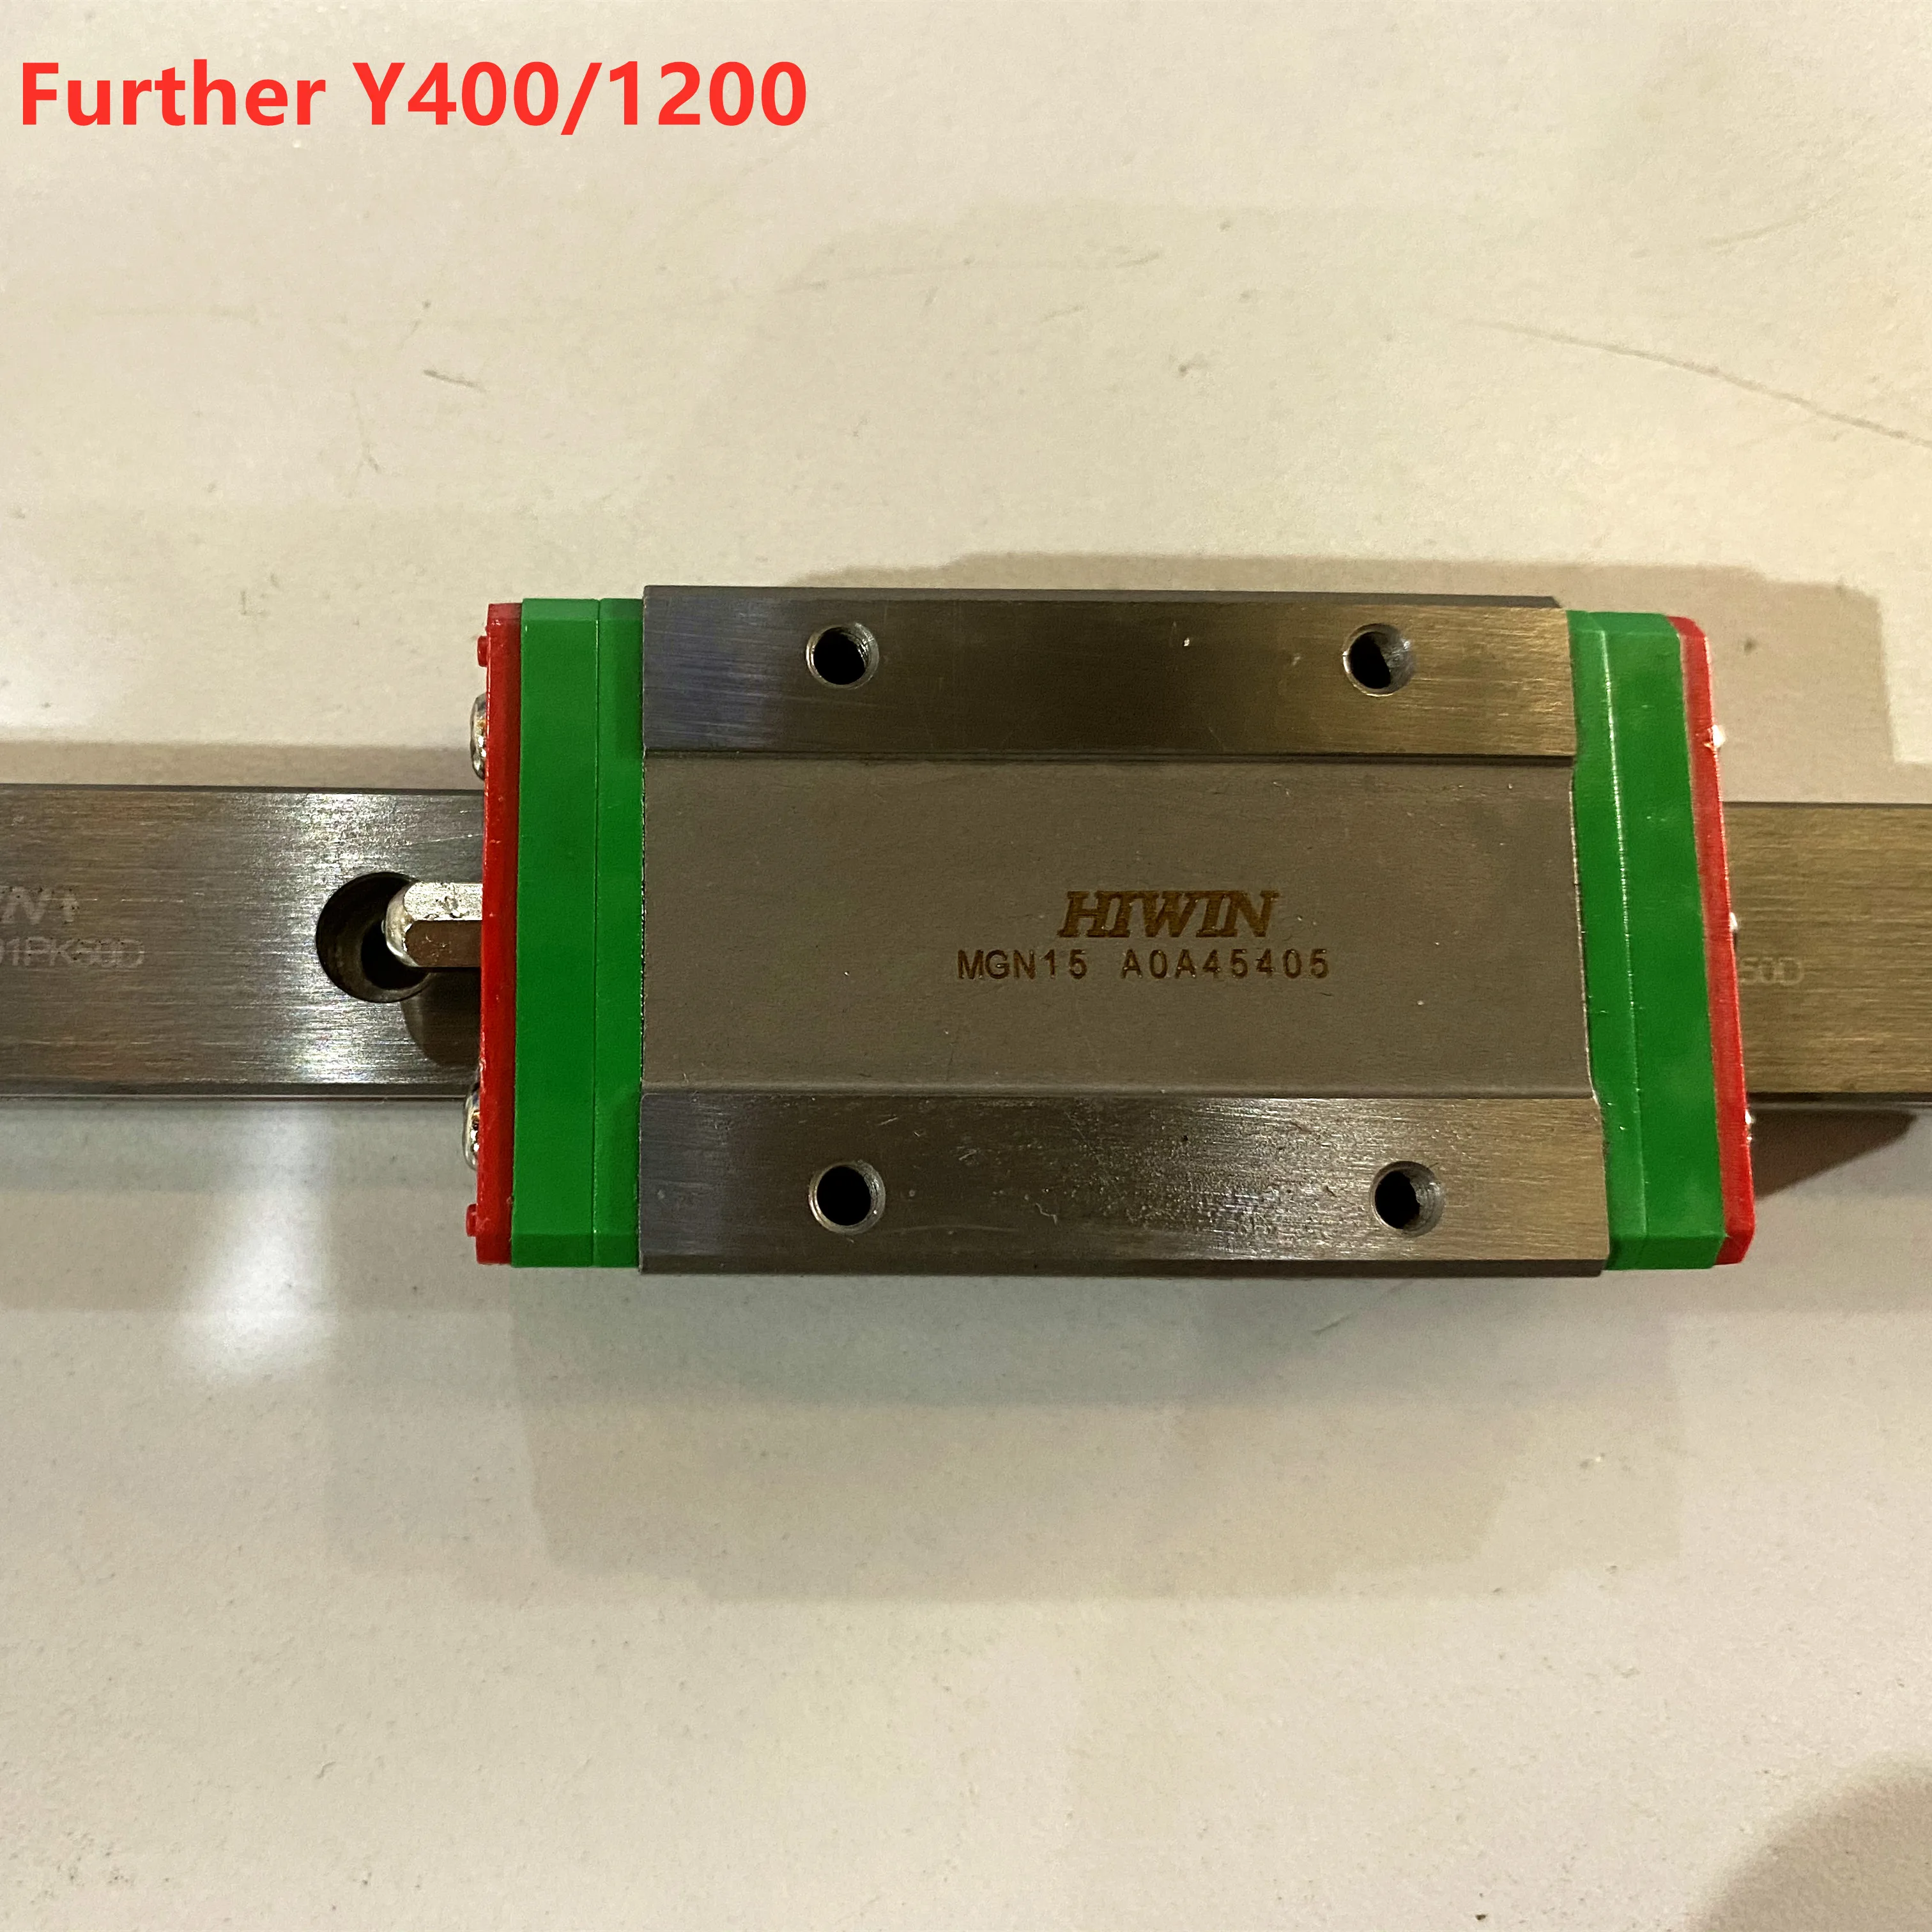 

Blurolls Genuine Hiwin MGN15H Linear Rails Set for Further Y400 Y1200 V1.5 V2 Laser Cutter and Engraver